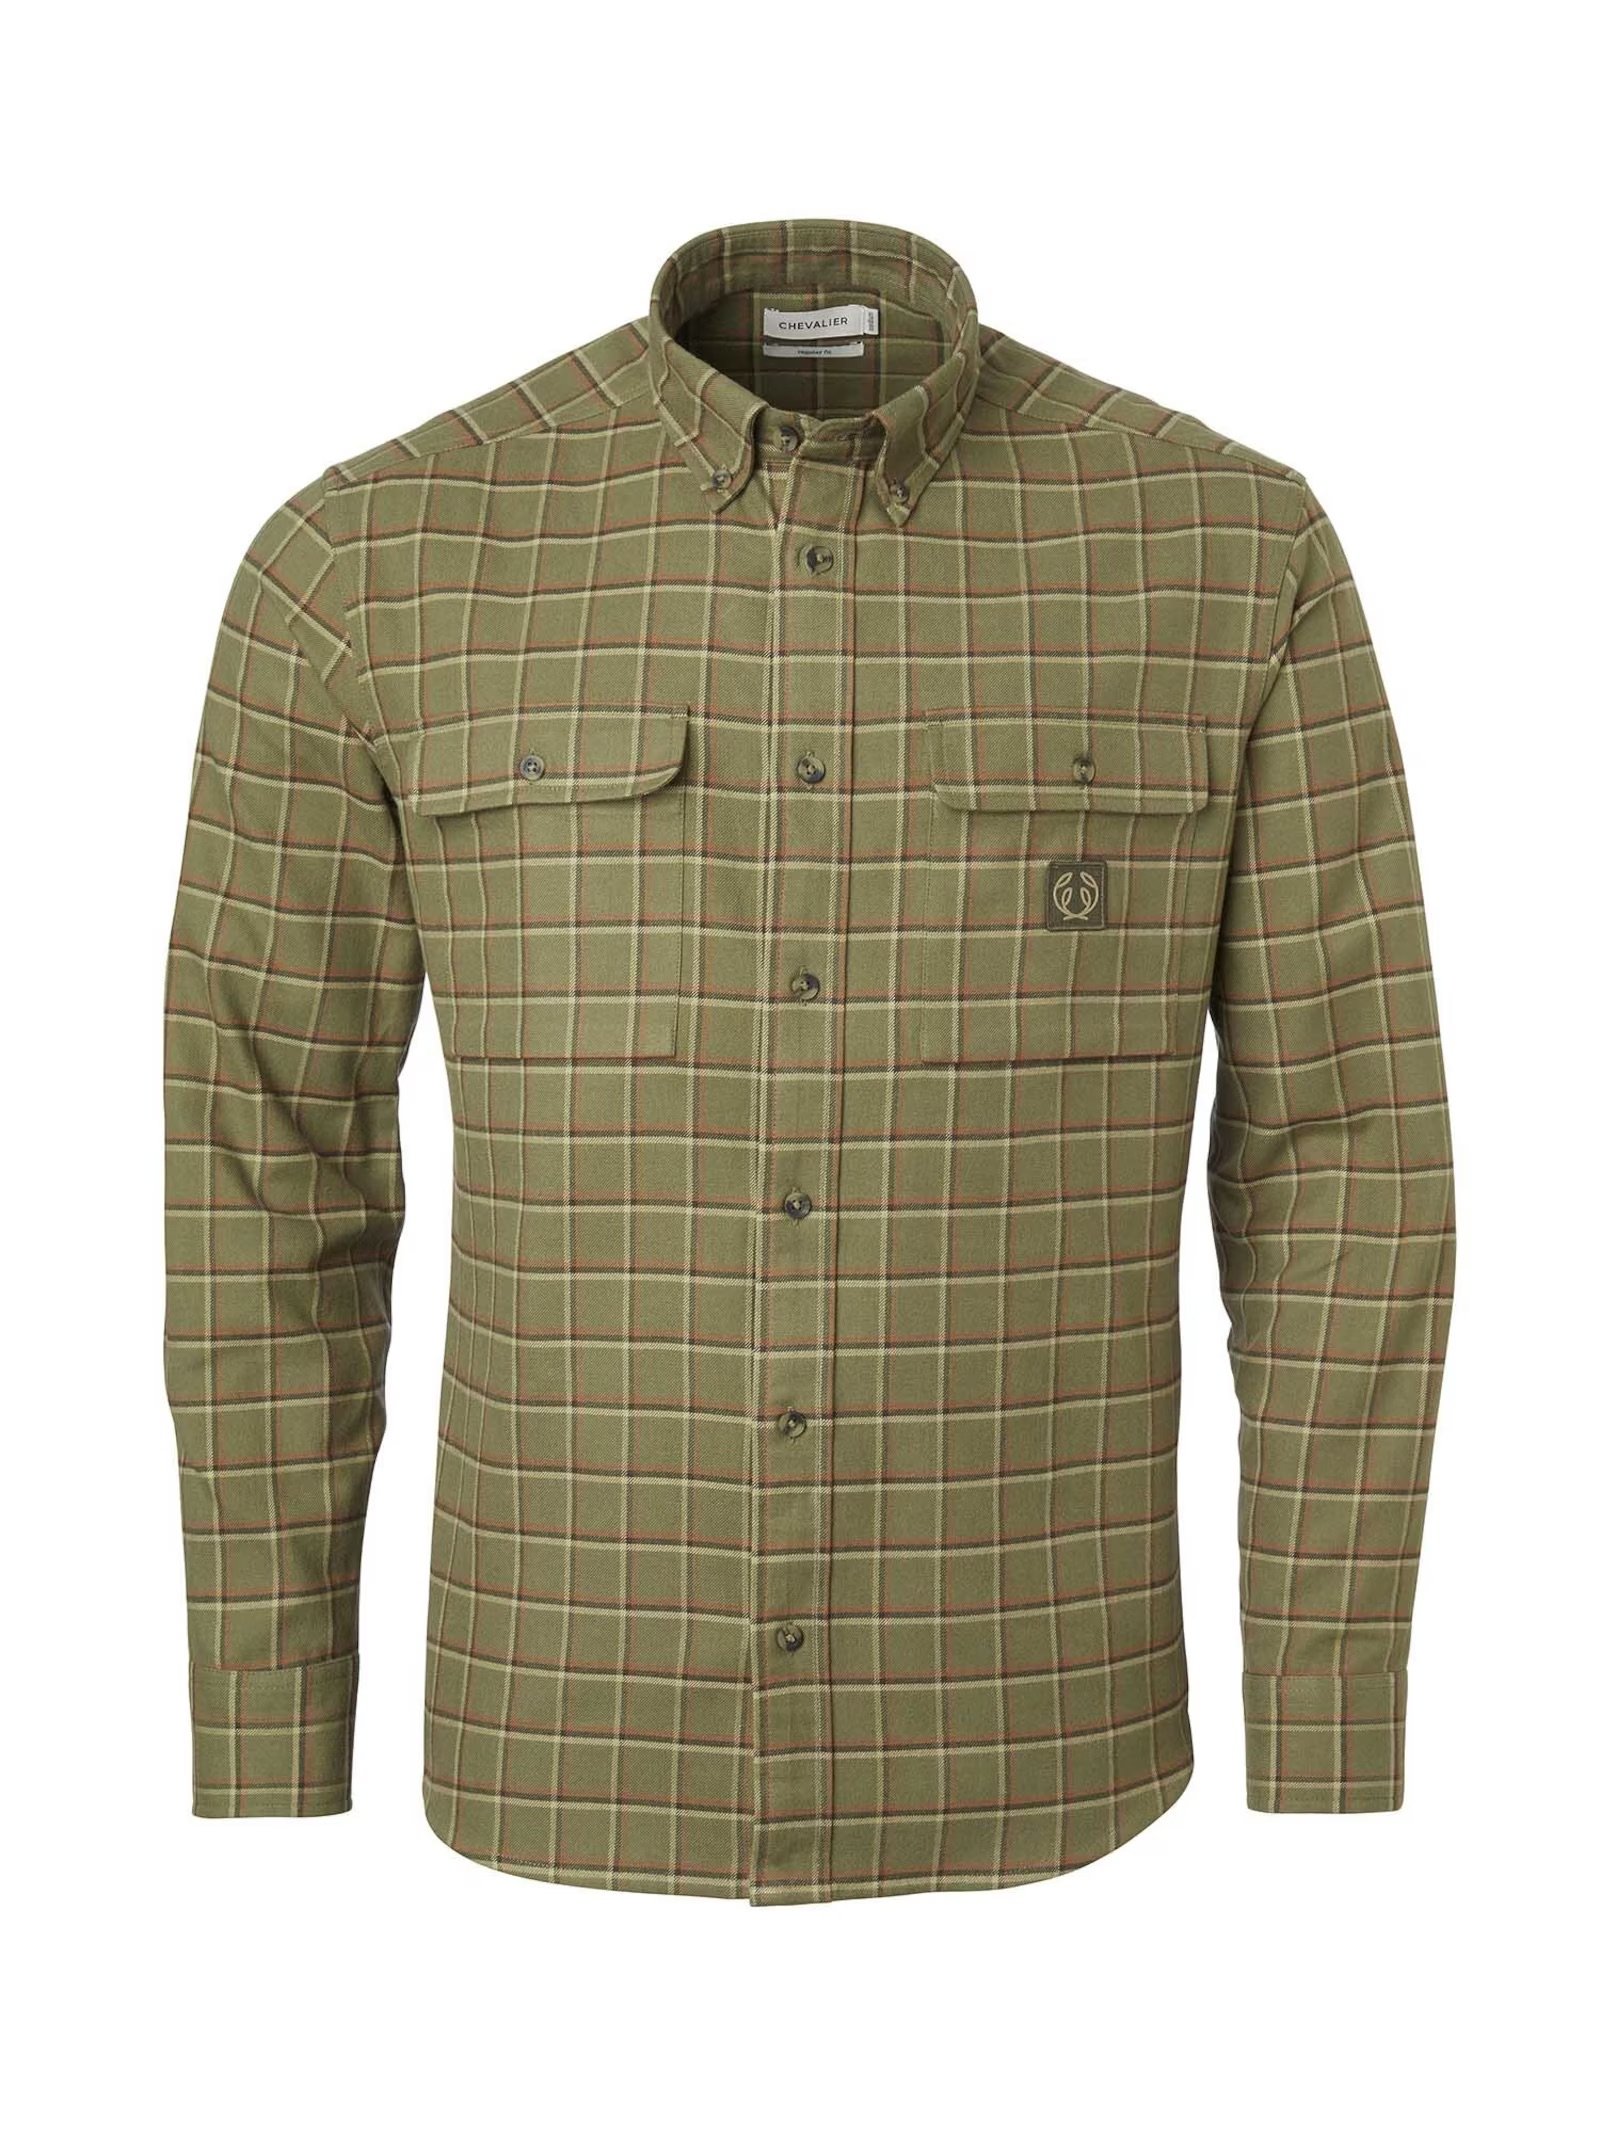 Heron Flannel Shirt Men - Field Green